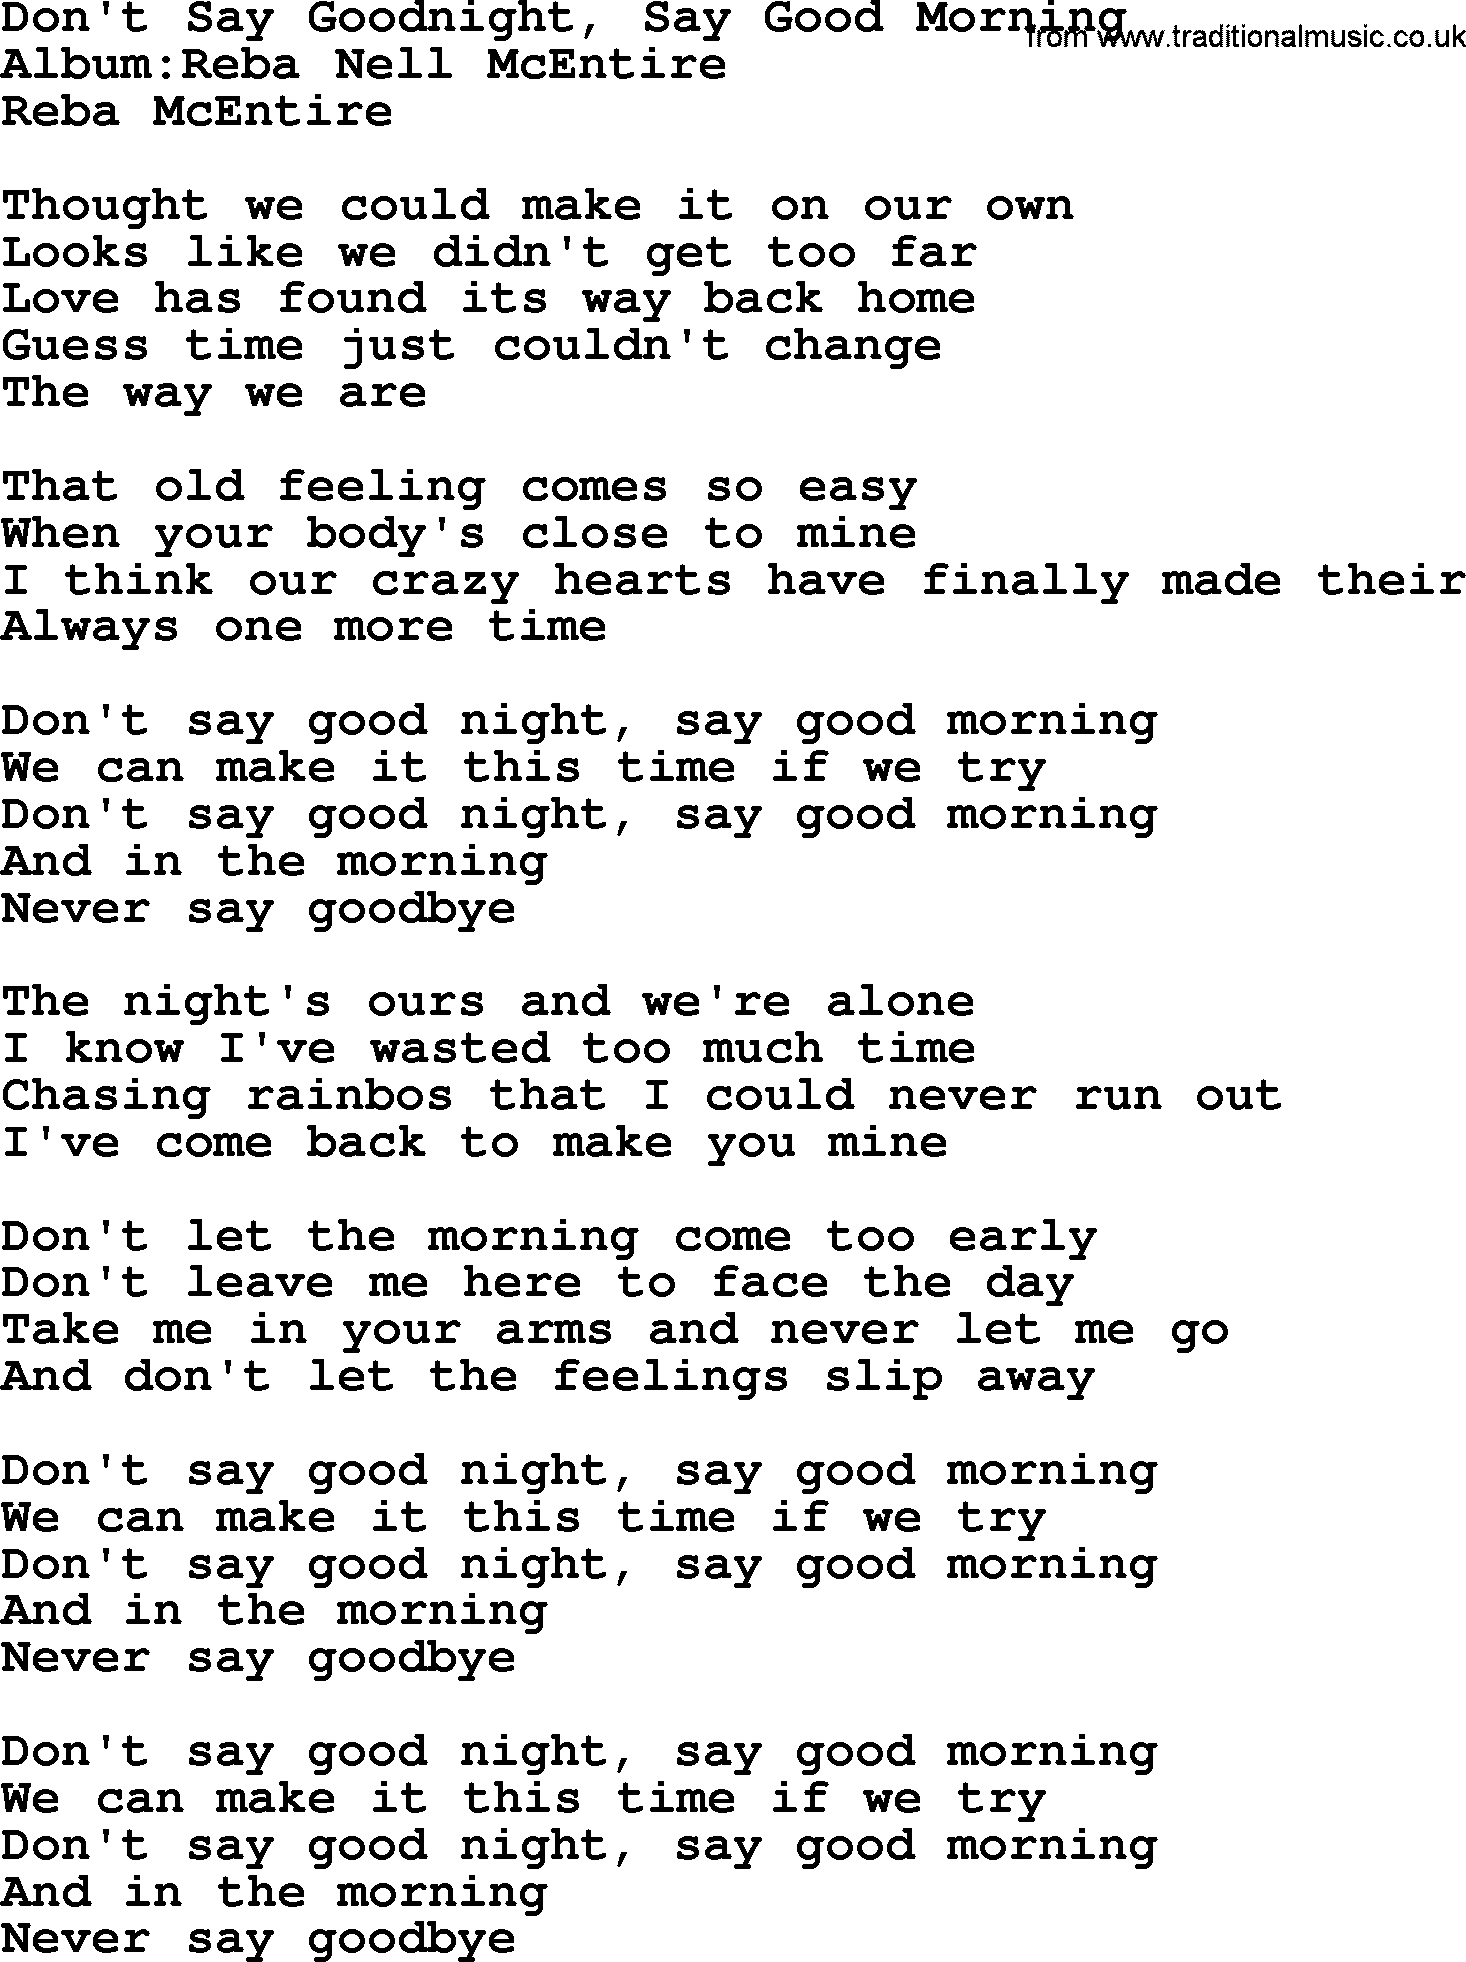 Reba McEntire song: Don't Say Goodnight, Say Good Morning lyrics